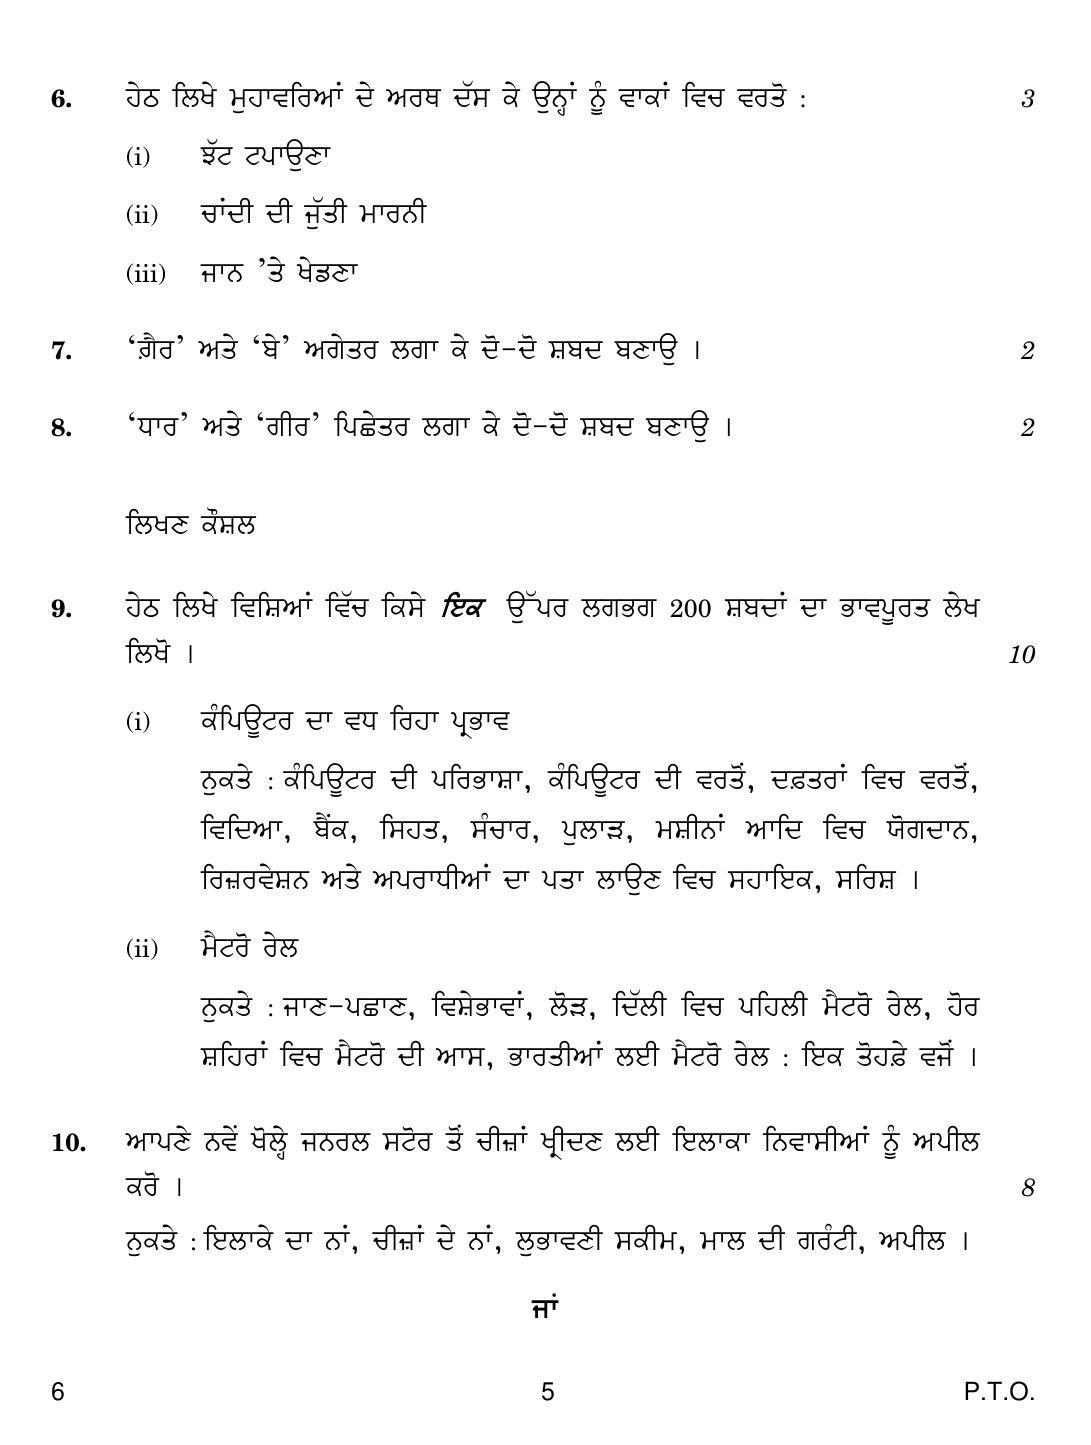 CBSE Class 10 6 Punjabi 2019 Compartment Question Paper - Page 5